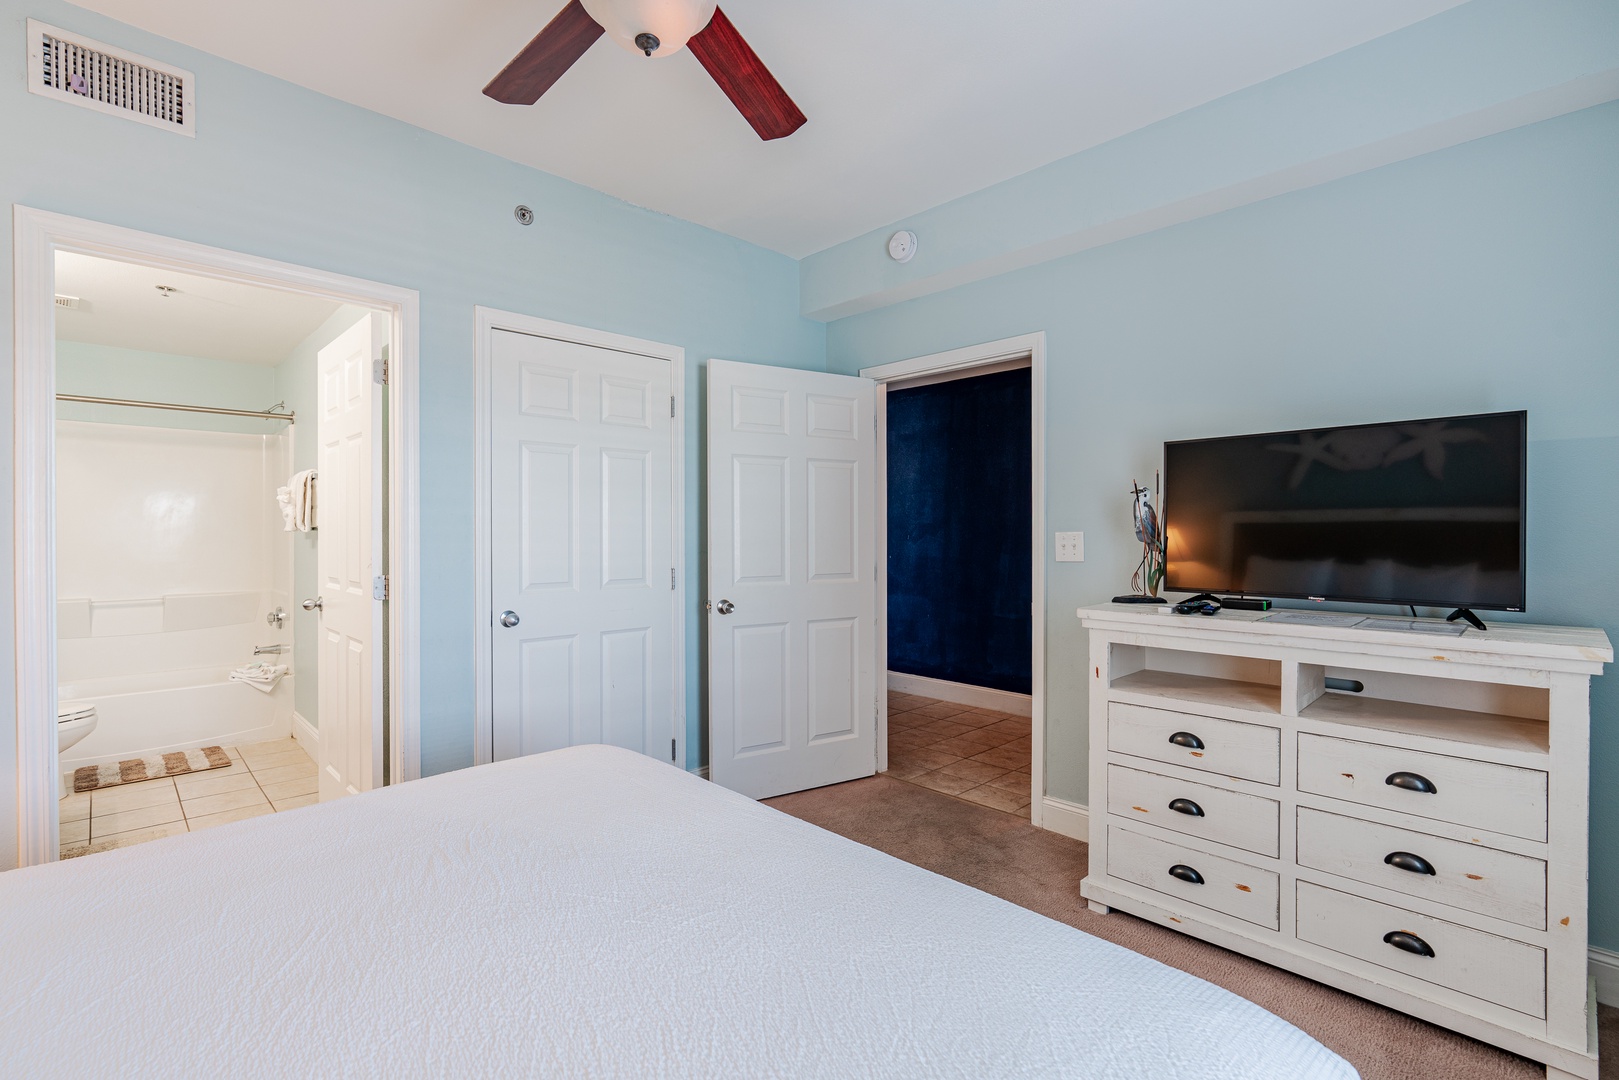 The king suite offers a private en suite, Smart TV, & ceiling fan